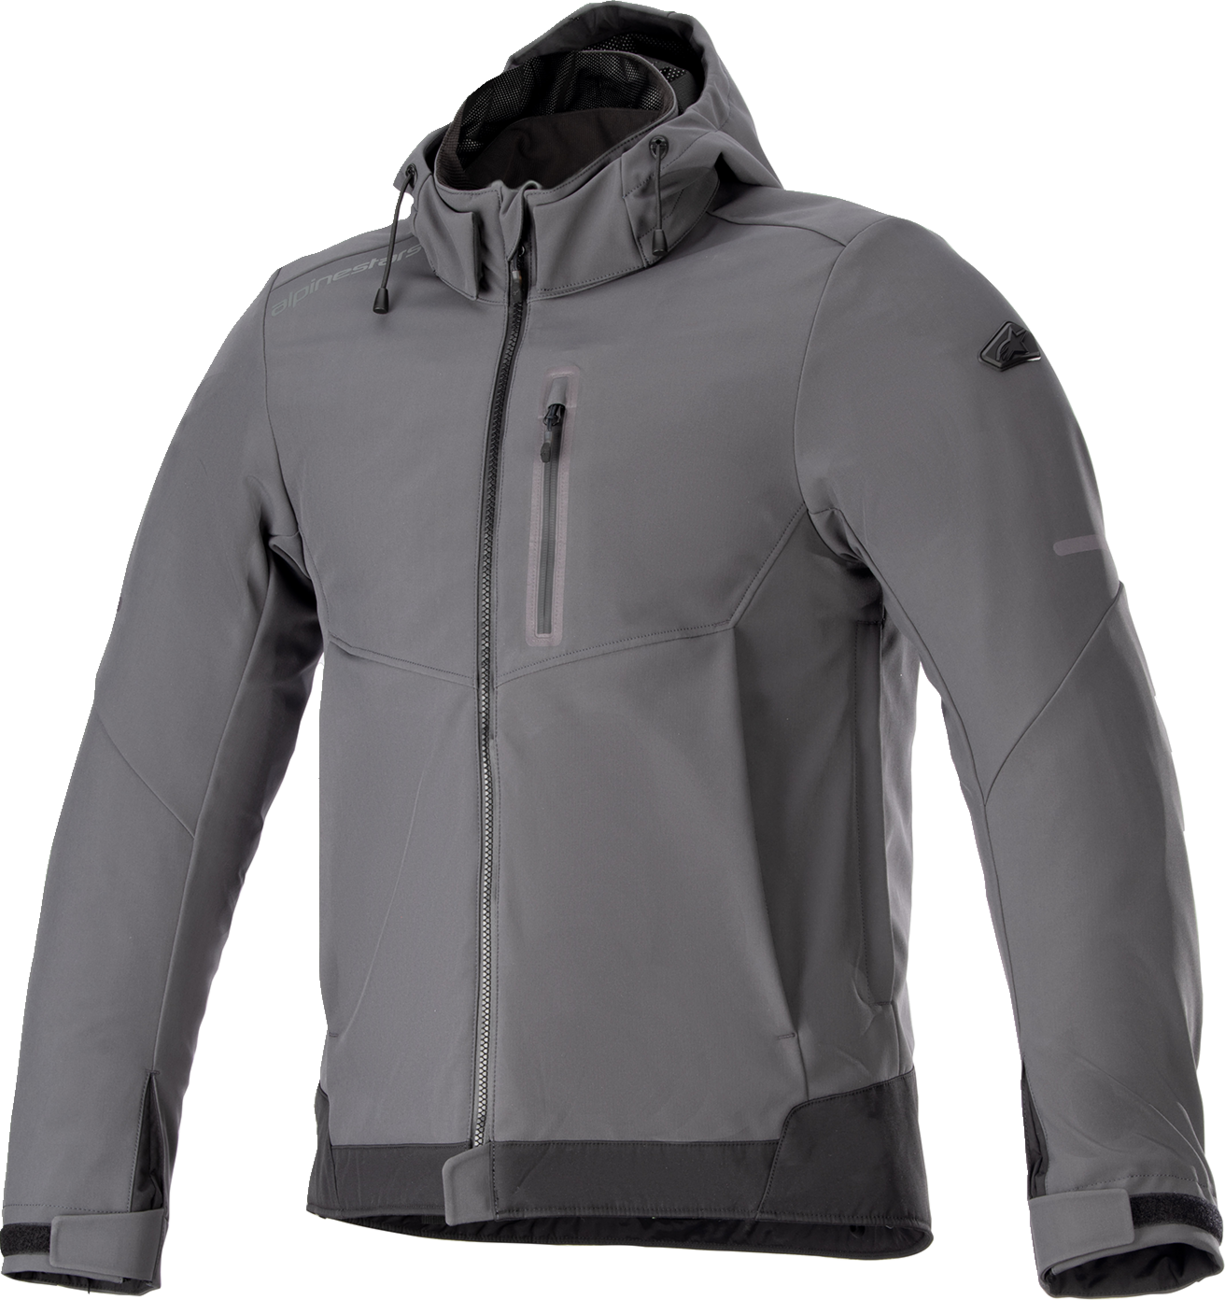 ALPINESTARS Neo Waterproof Jacket - Gray/Black - Medium 4208023-9610-M